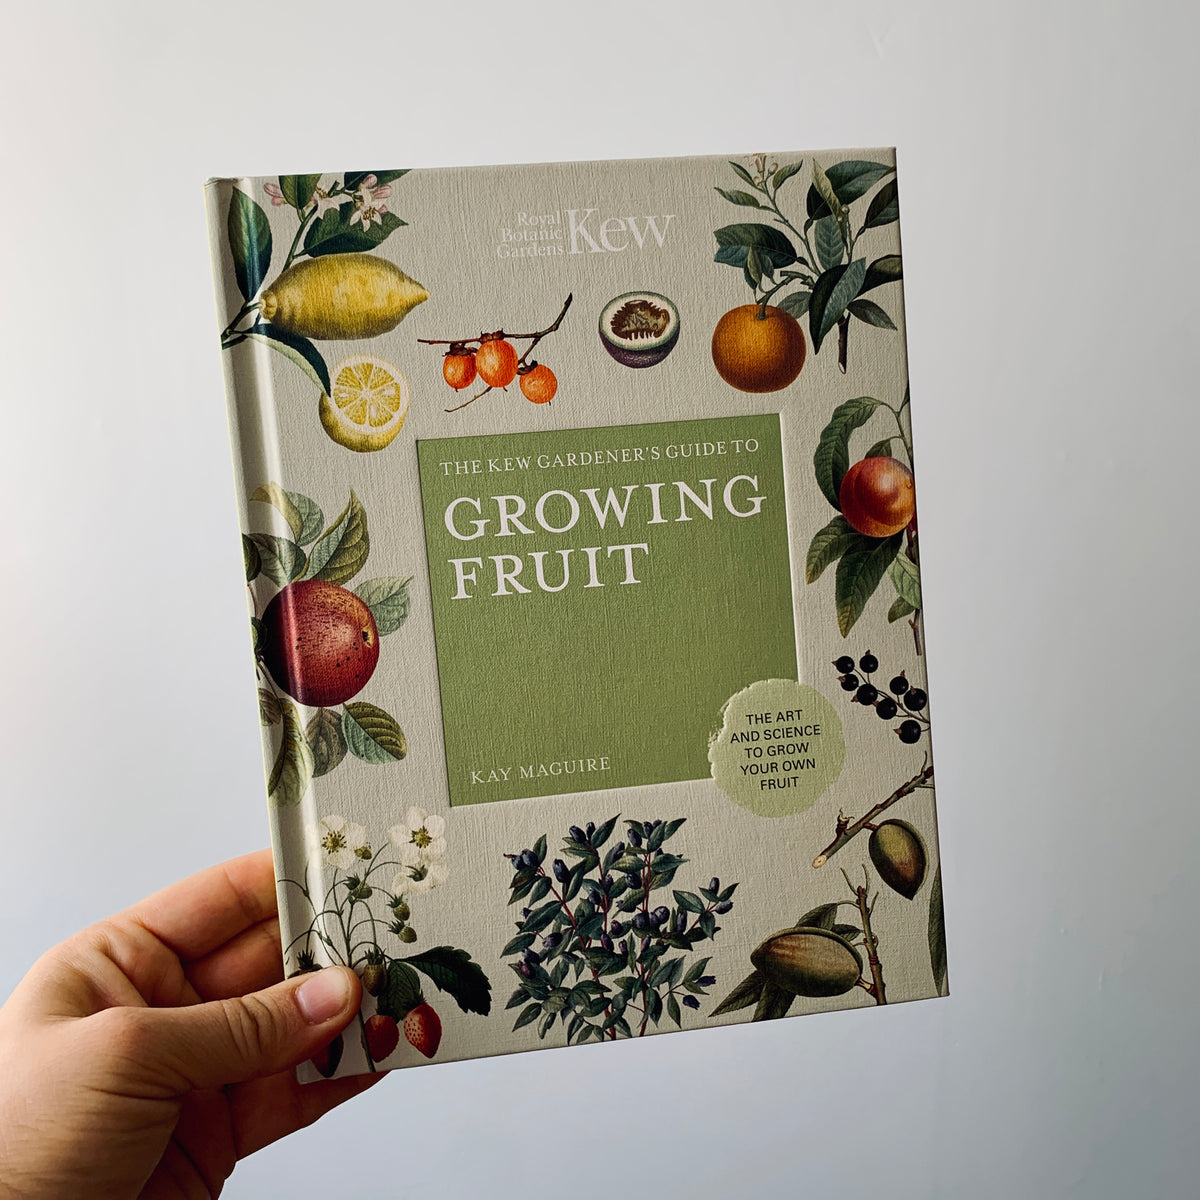 KEW GARDENER’S GUIDE TO GROWING FRUIT